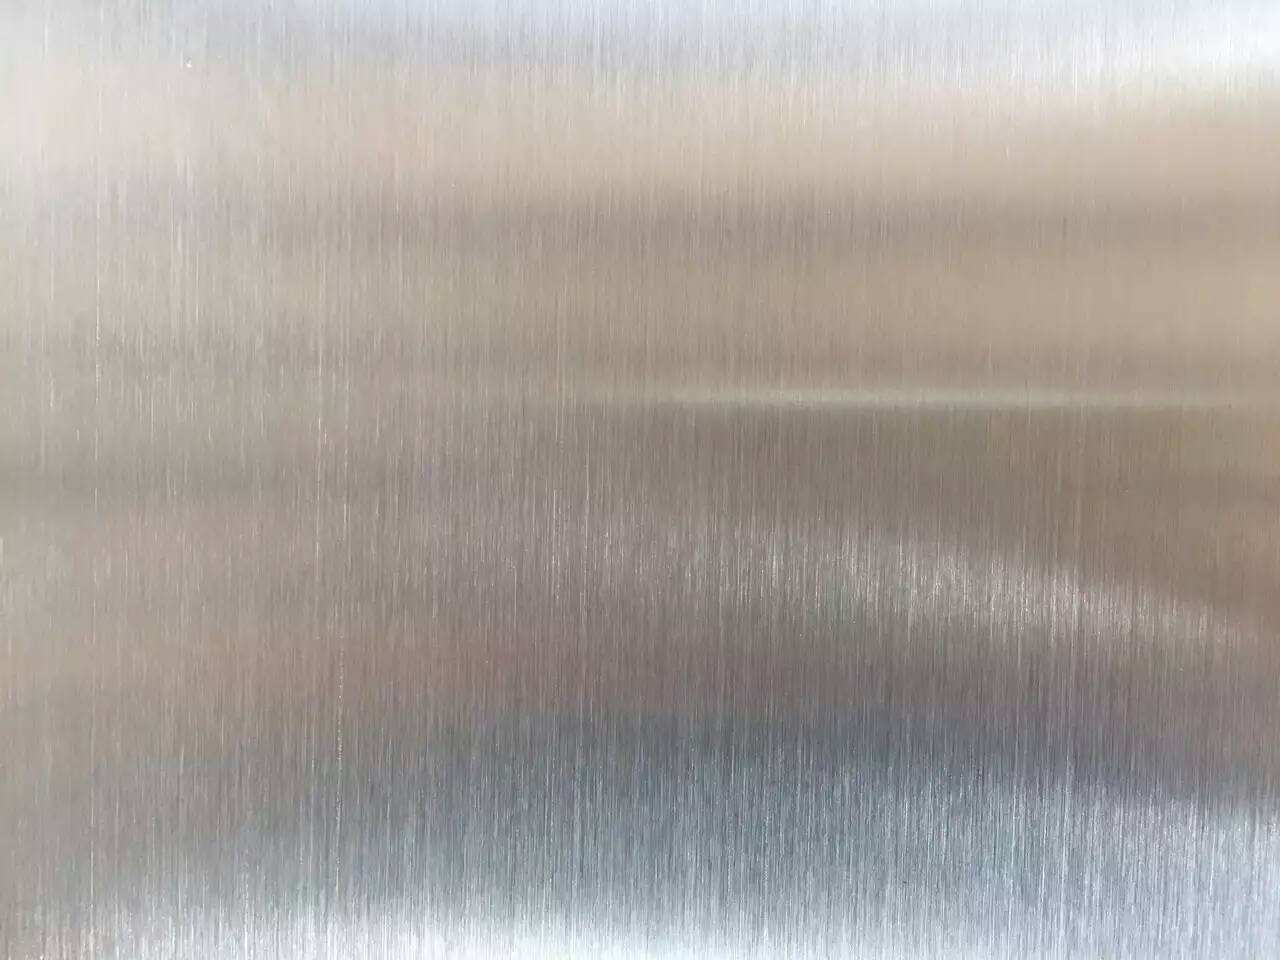 Brushed aluminum foil